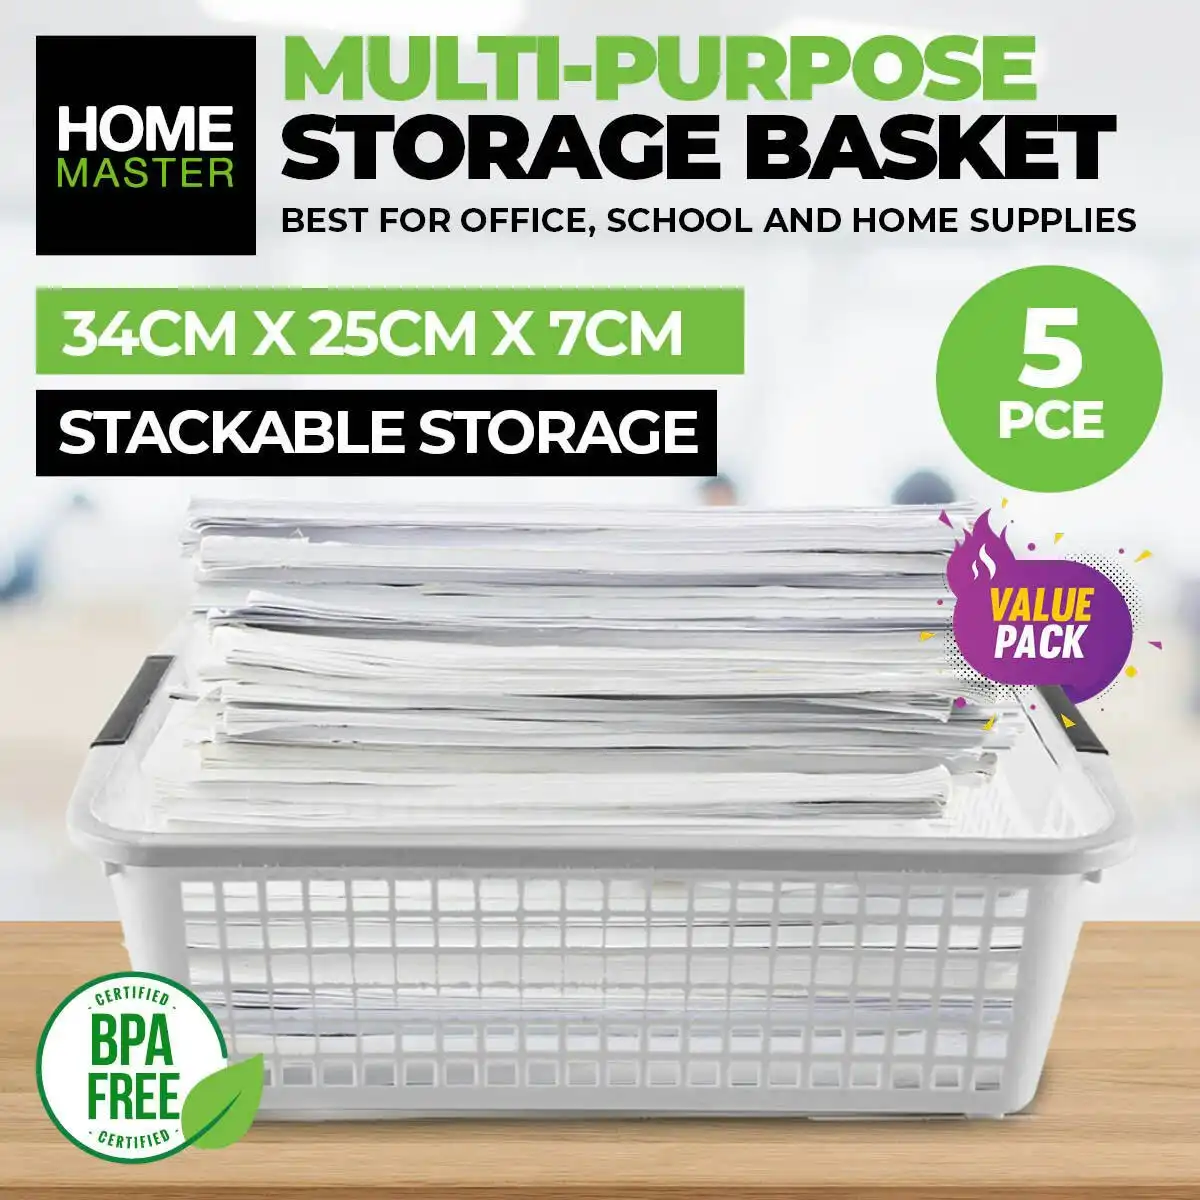 Home Master 5PCE Storage Baskets Multi Purpose Space Saving 25 x 34 x 7cm